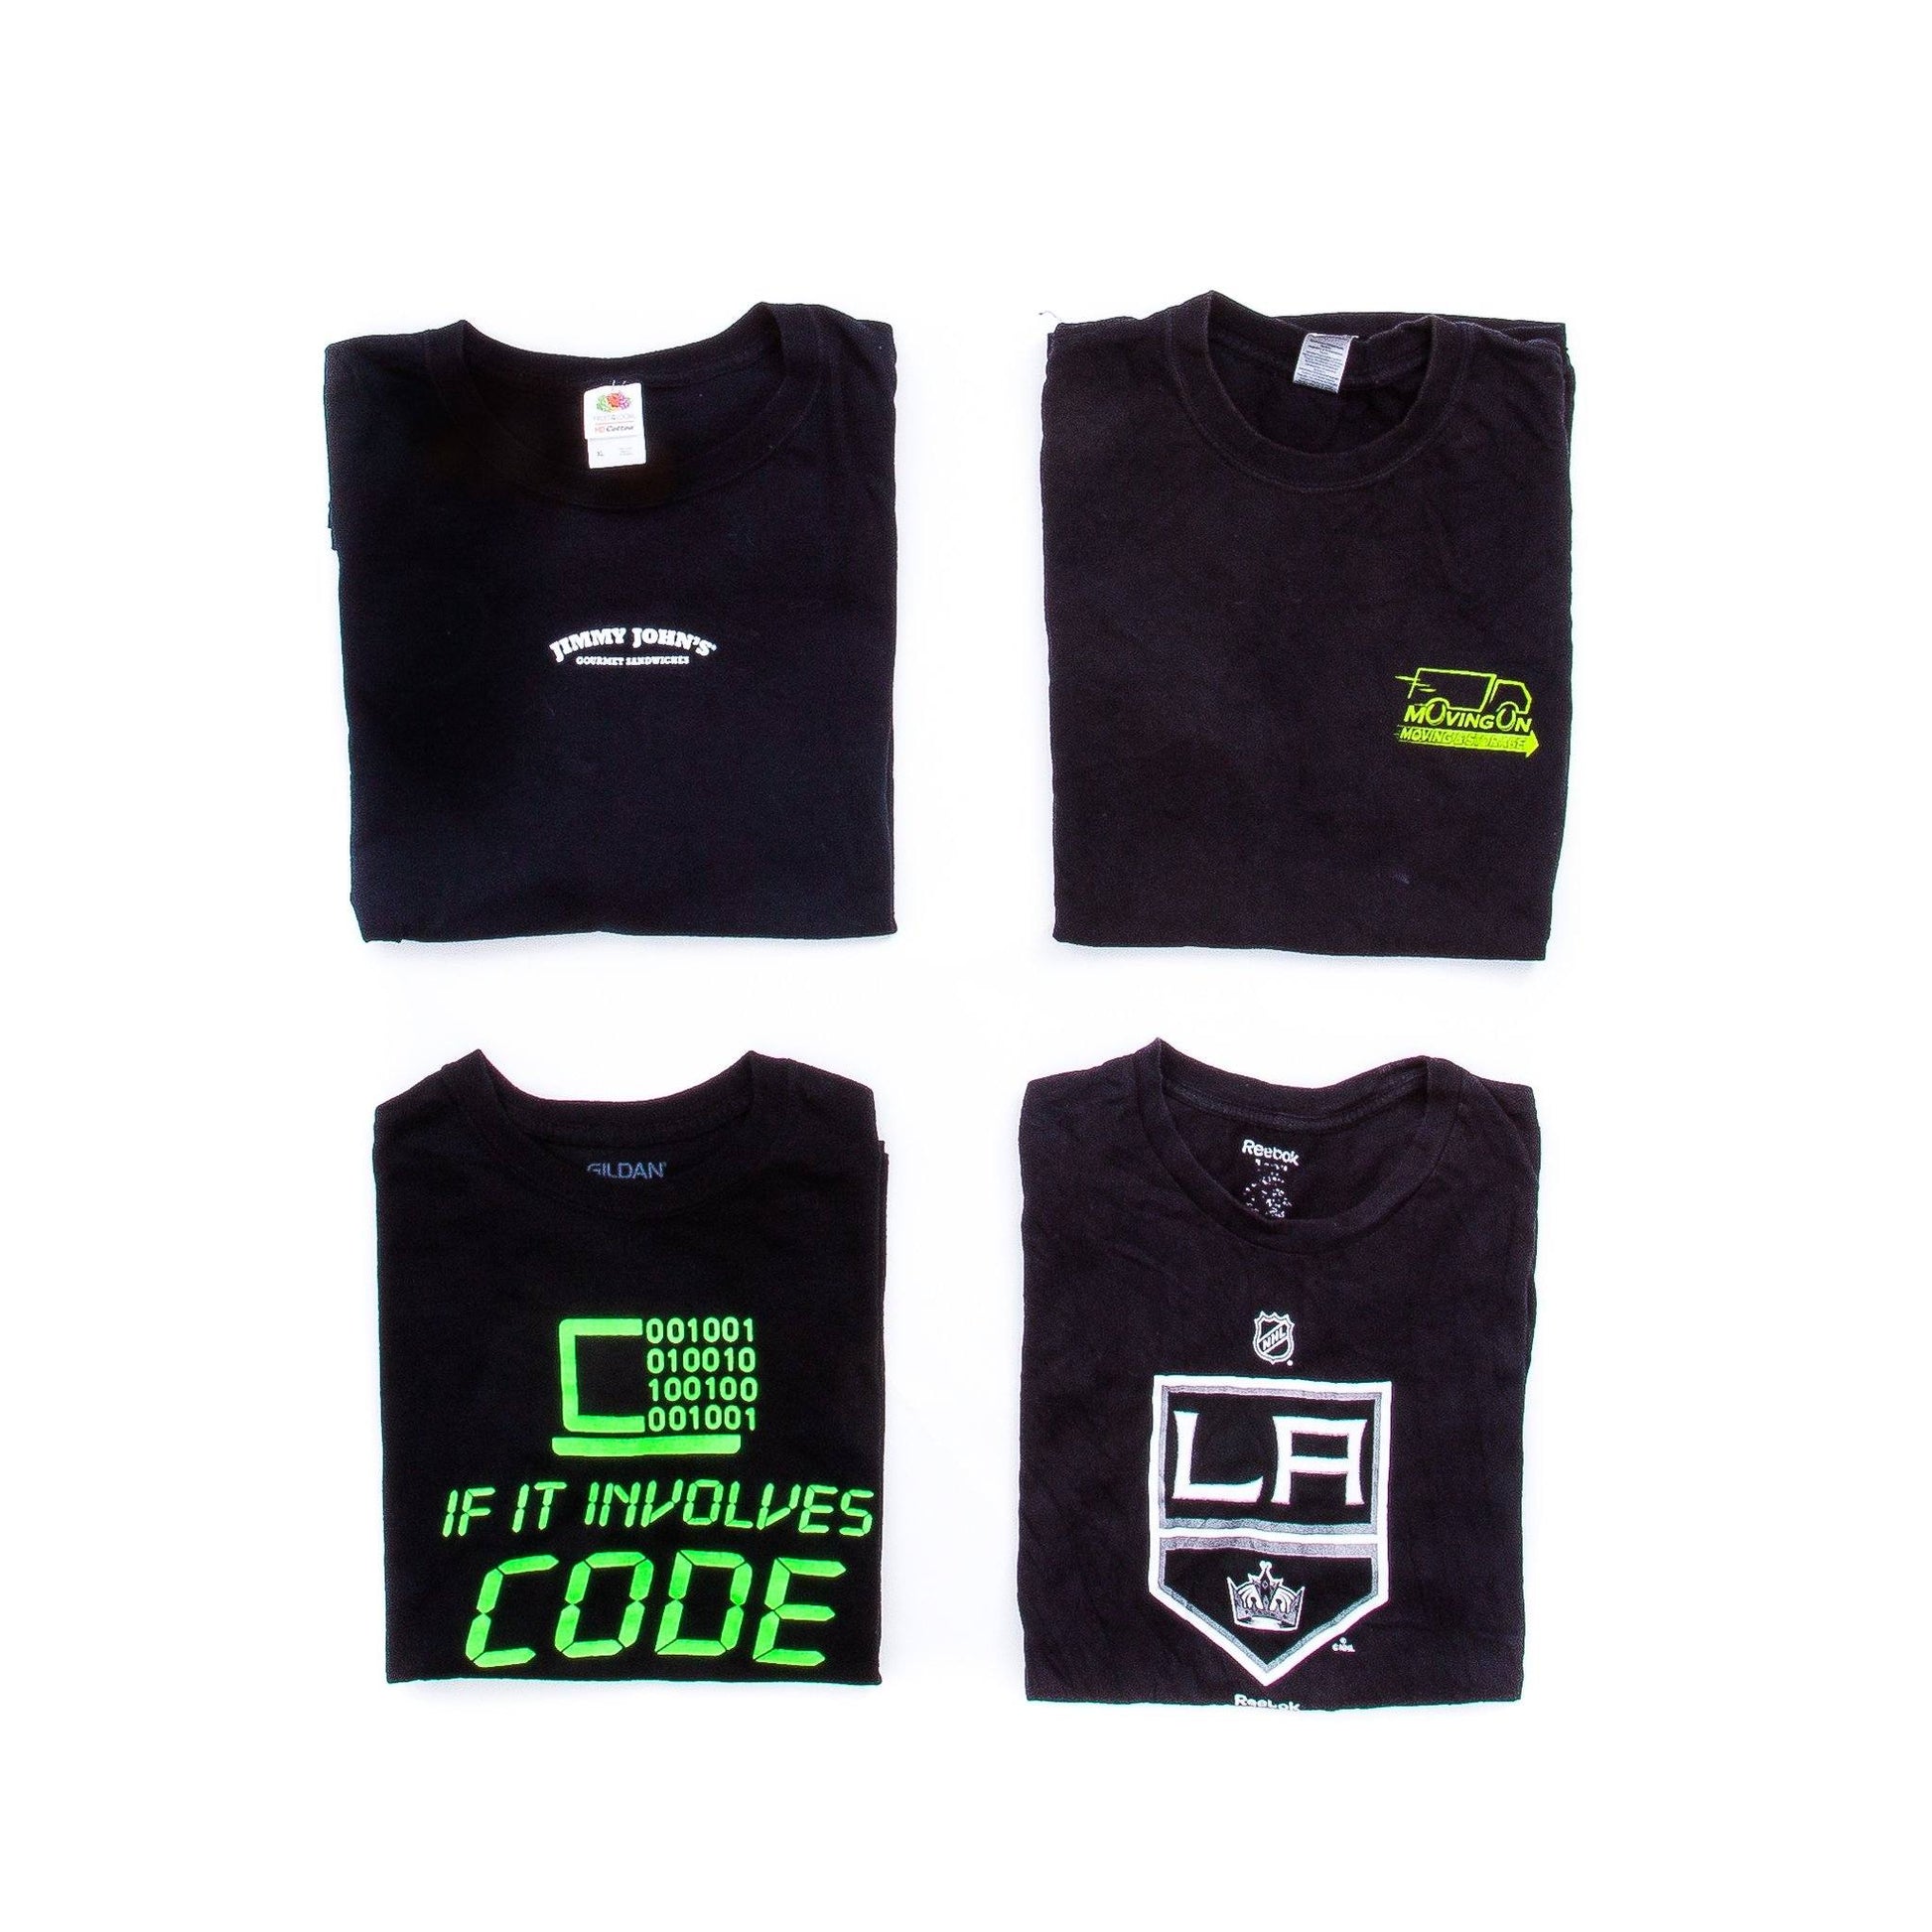 Preloved Printed Black T-Shirts | Set of 4 T-Shirts Goodfair 